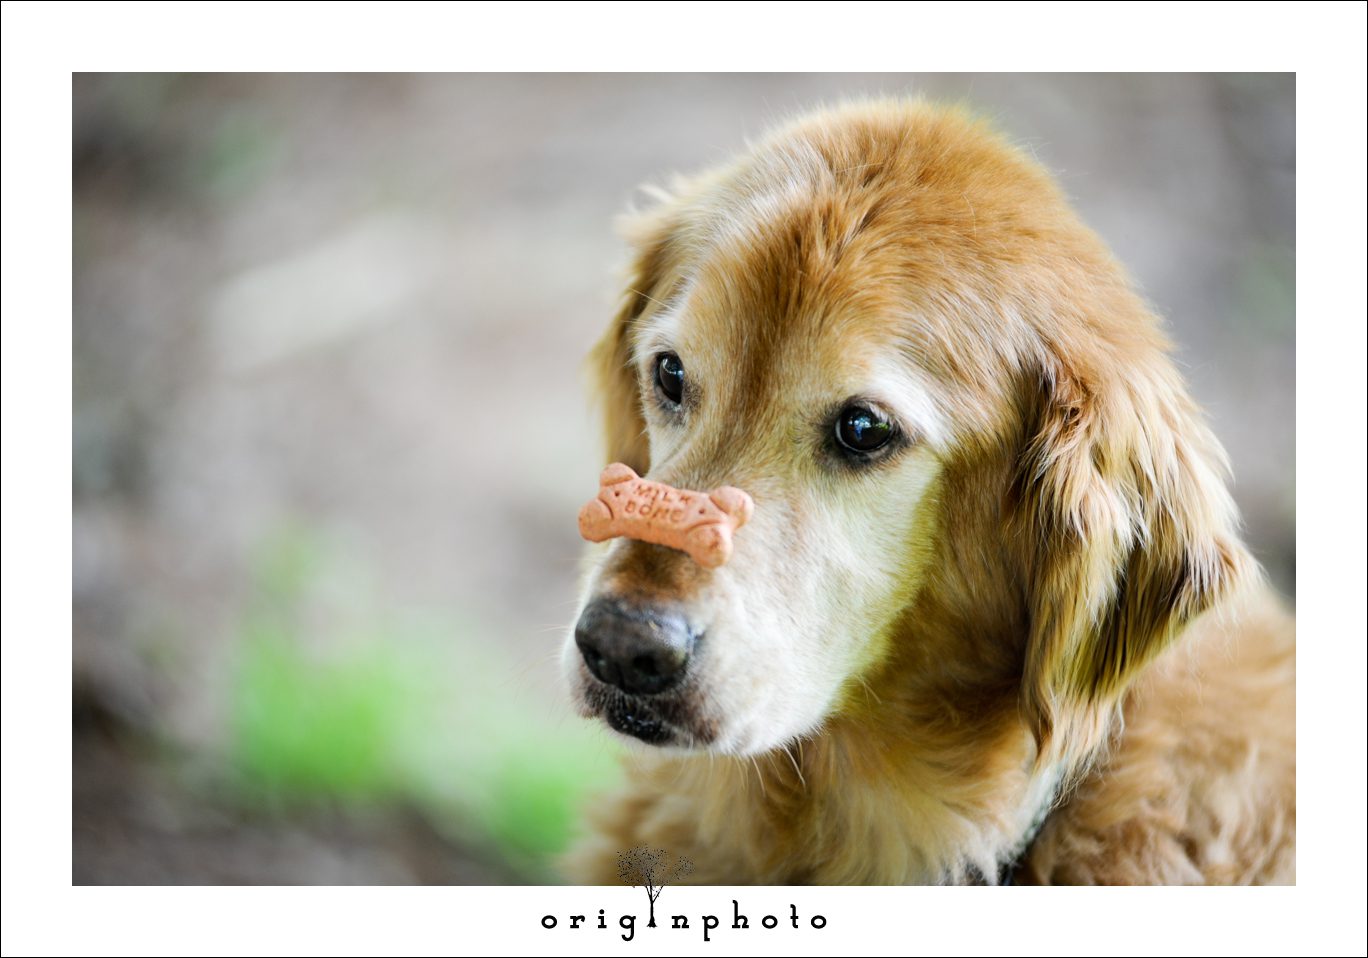 dog balancing dog treat on his nose